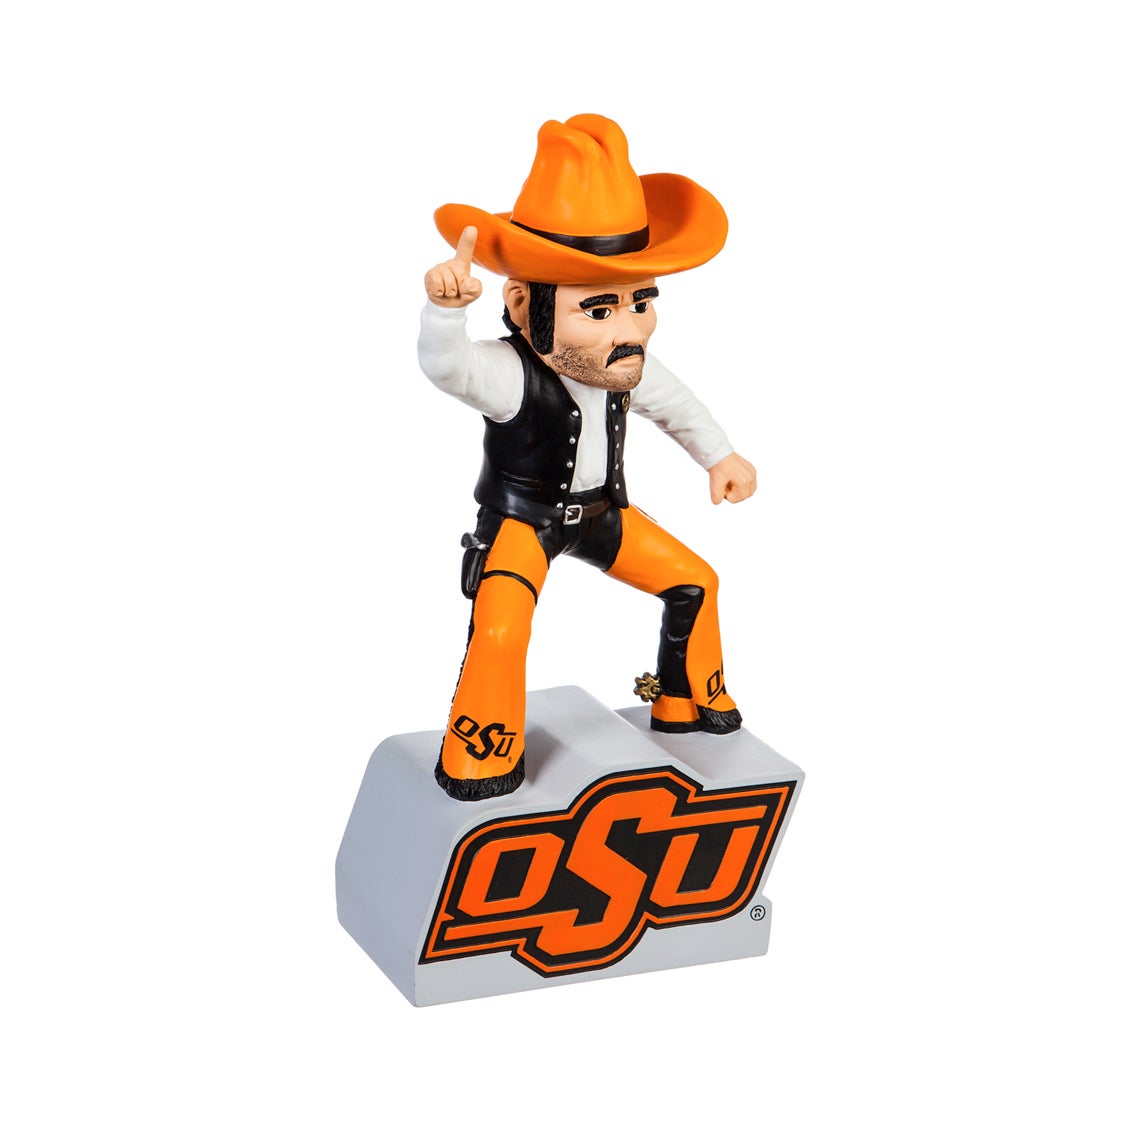 Oklahoma State University Mascot Statue